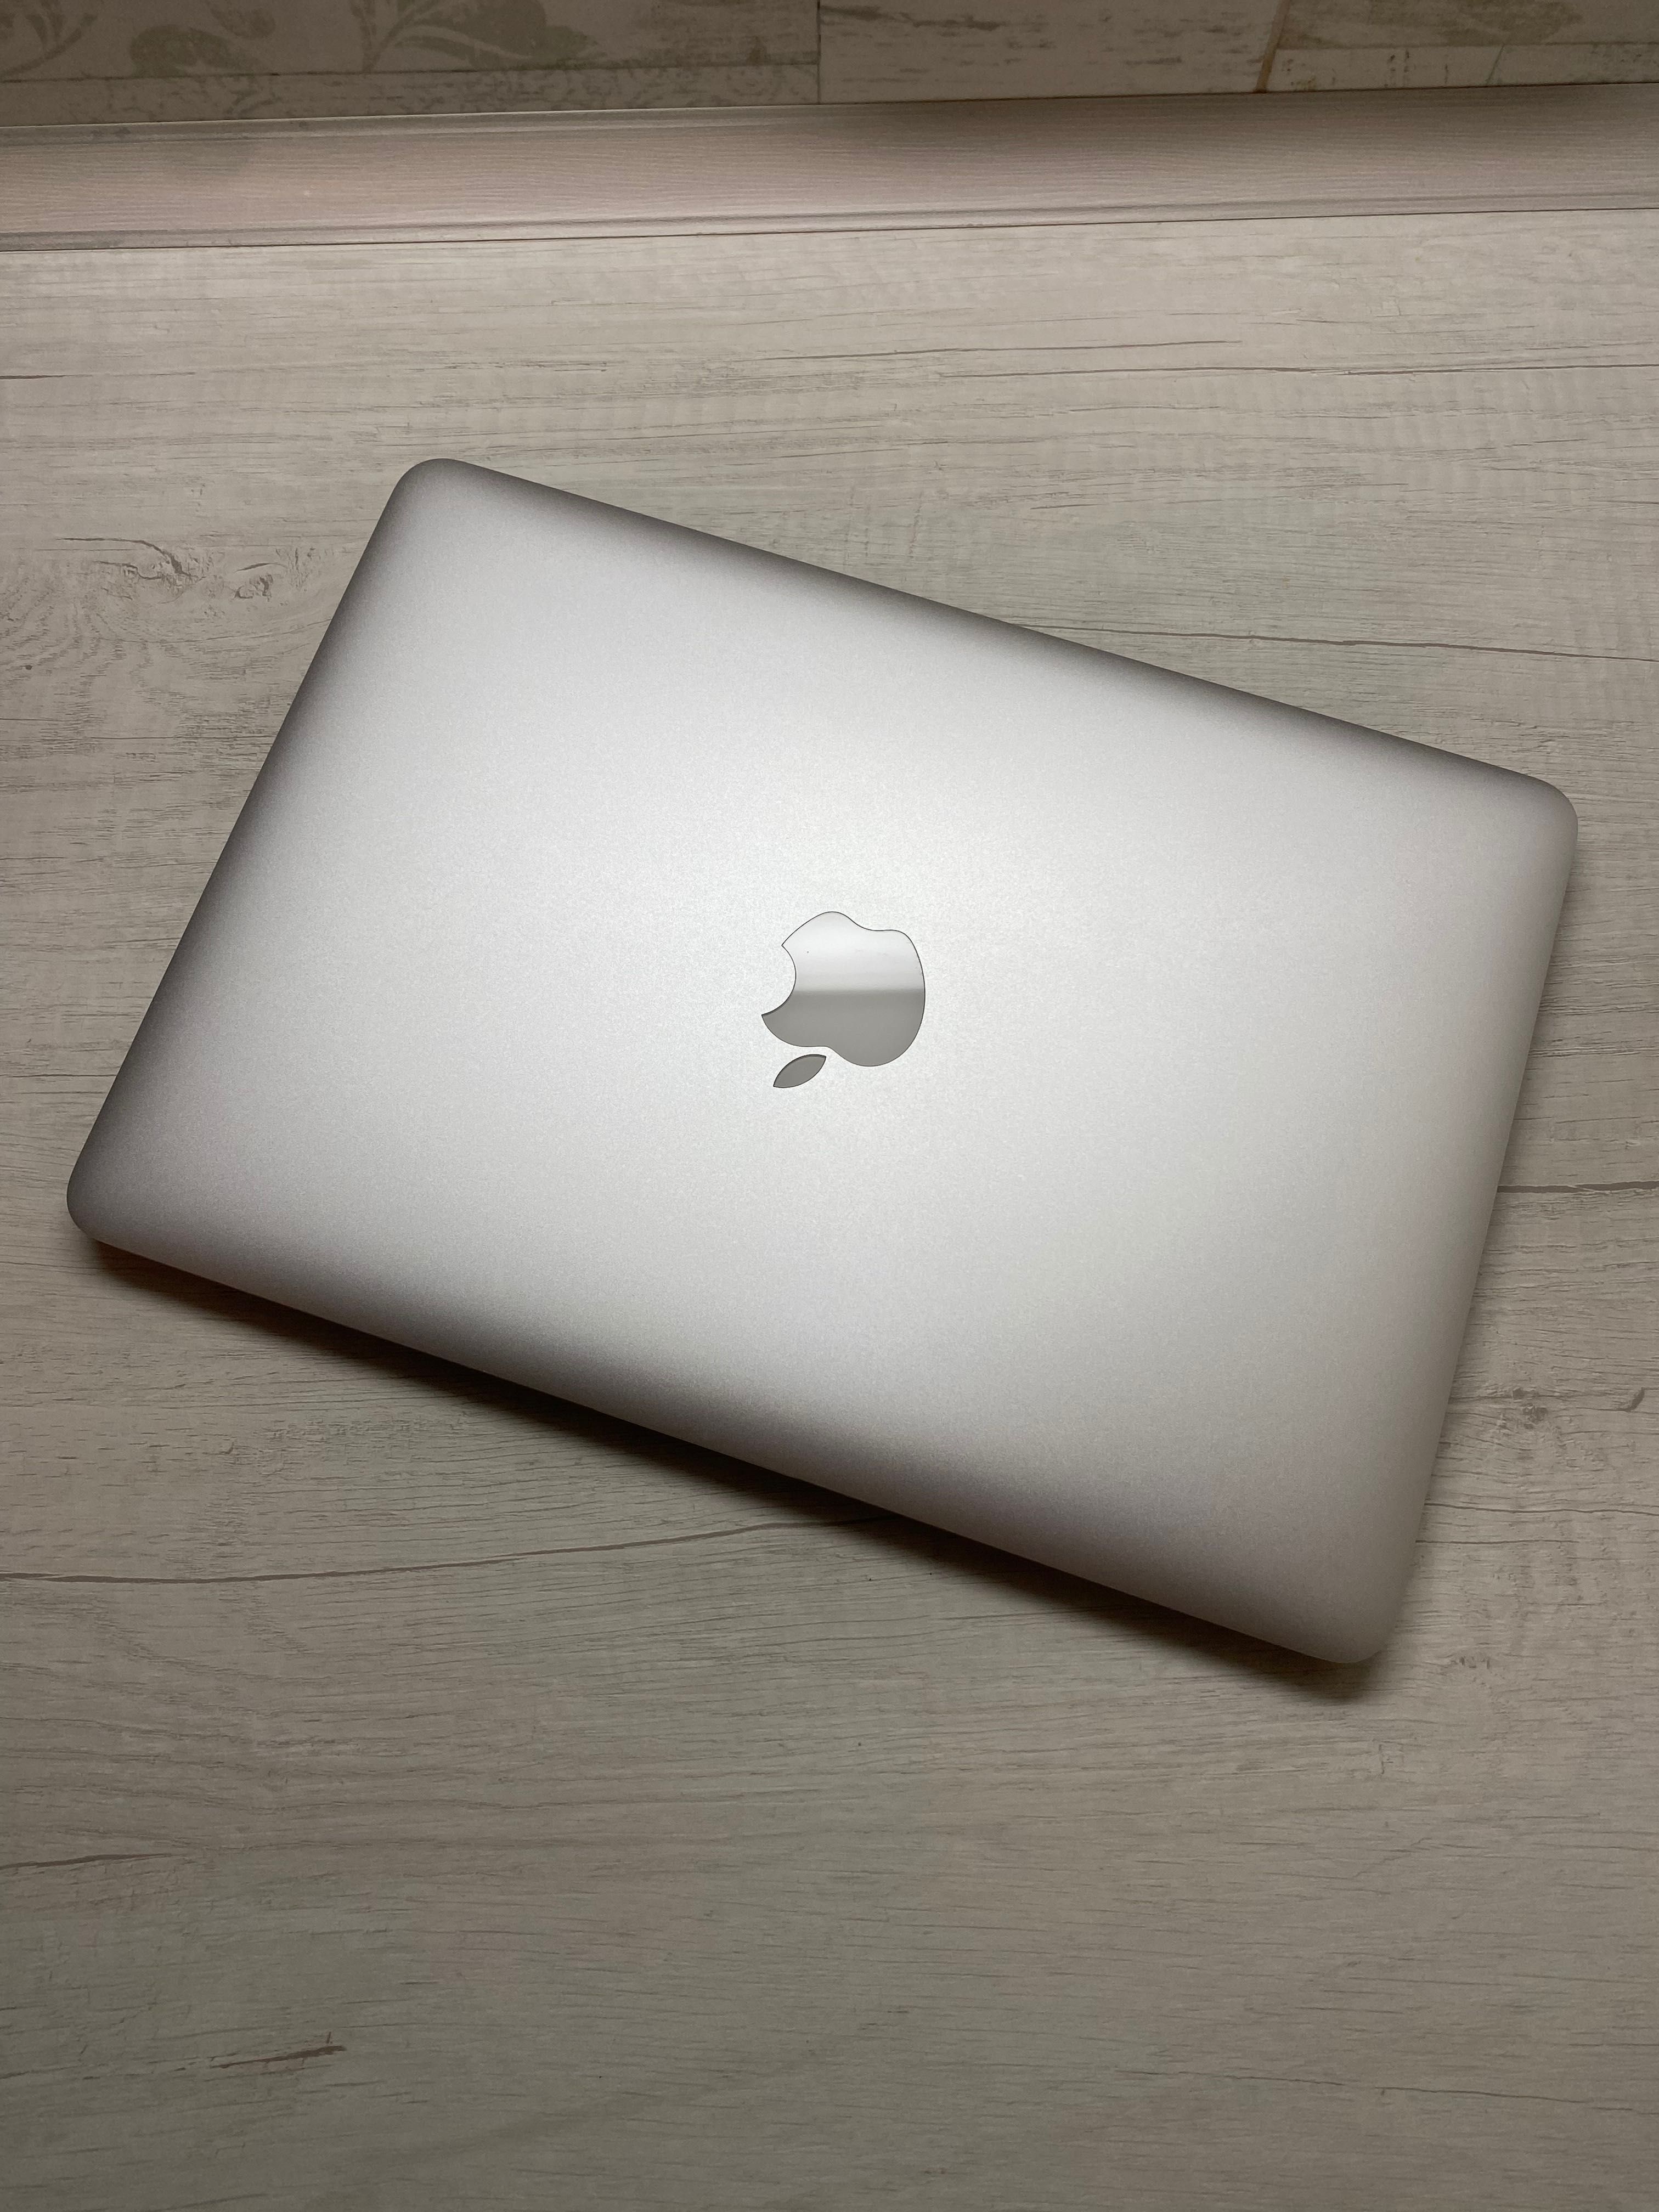 MacBook Pro 13 2015 I5